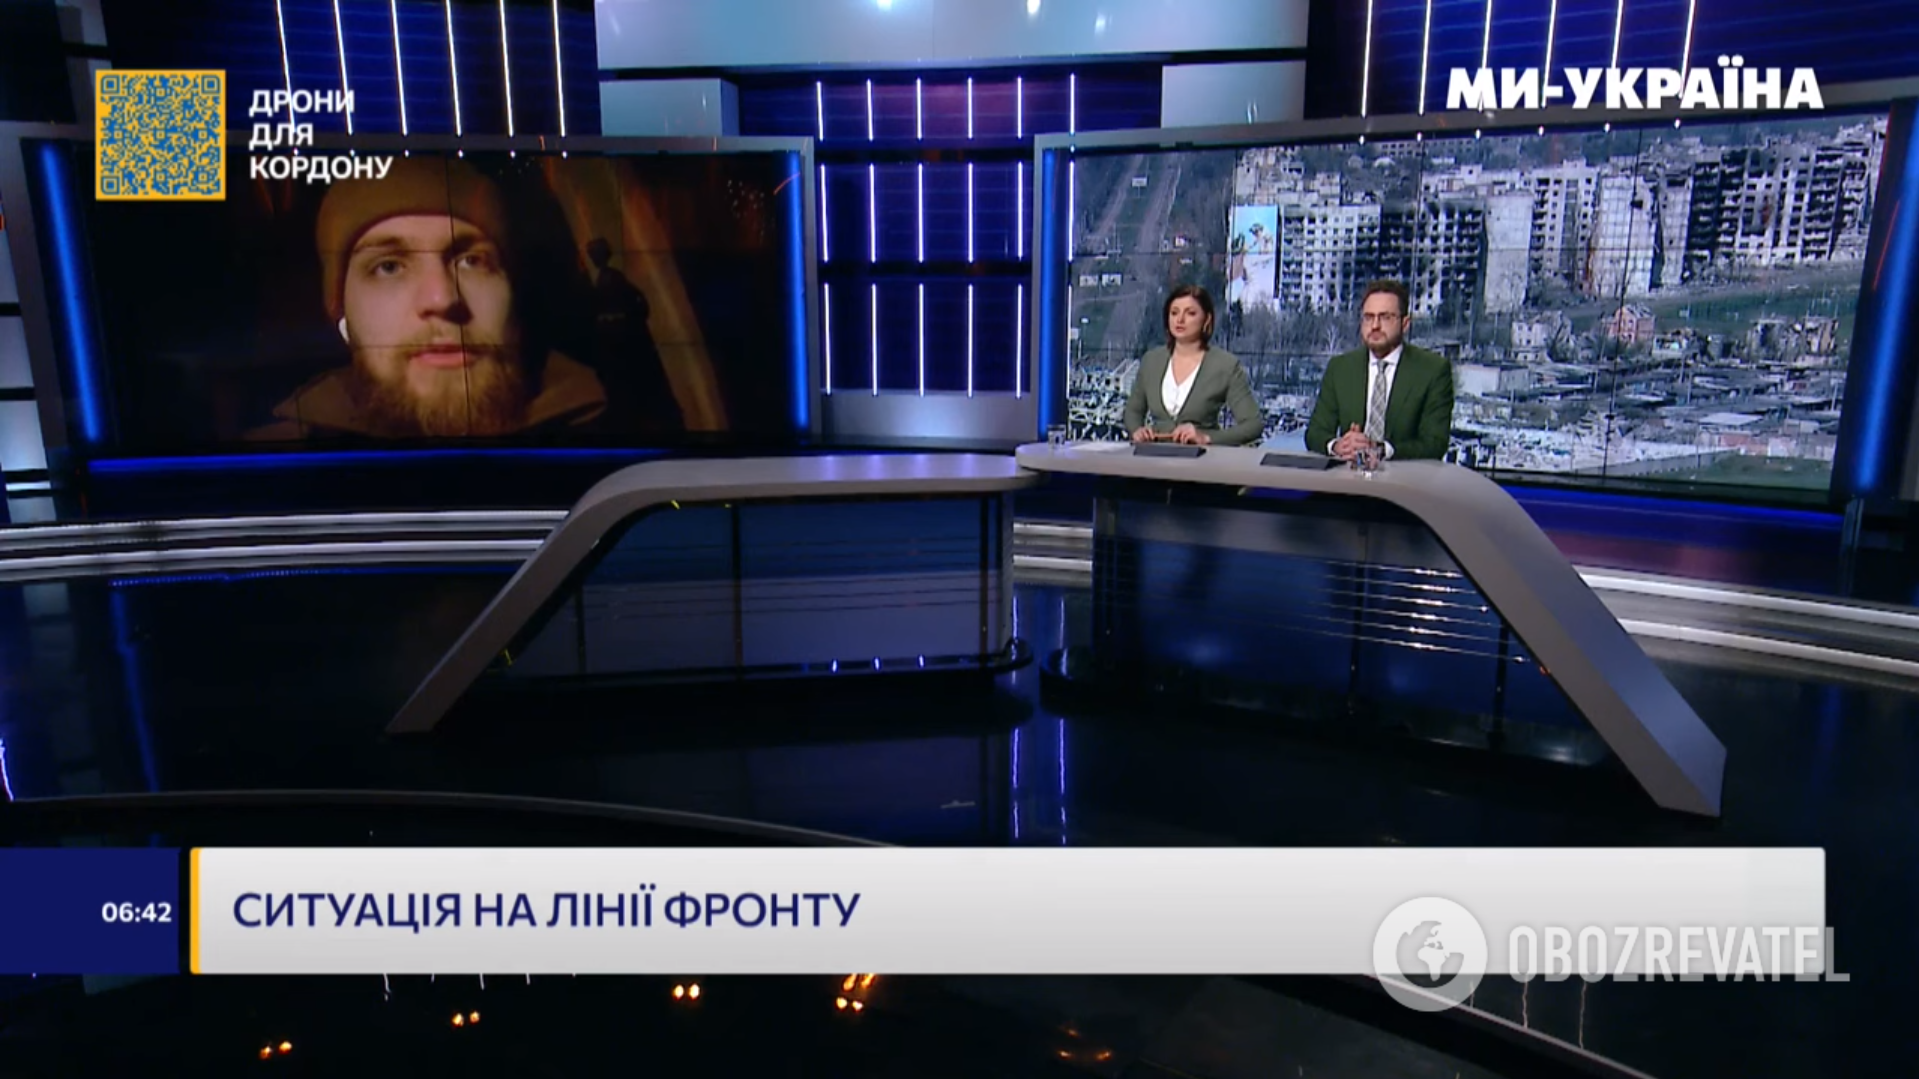 Oleksandr Borodin on the air of the Ukrainian TV channel